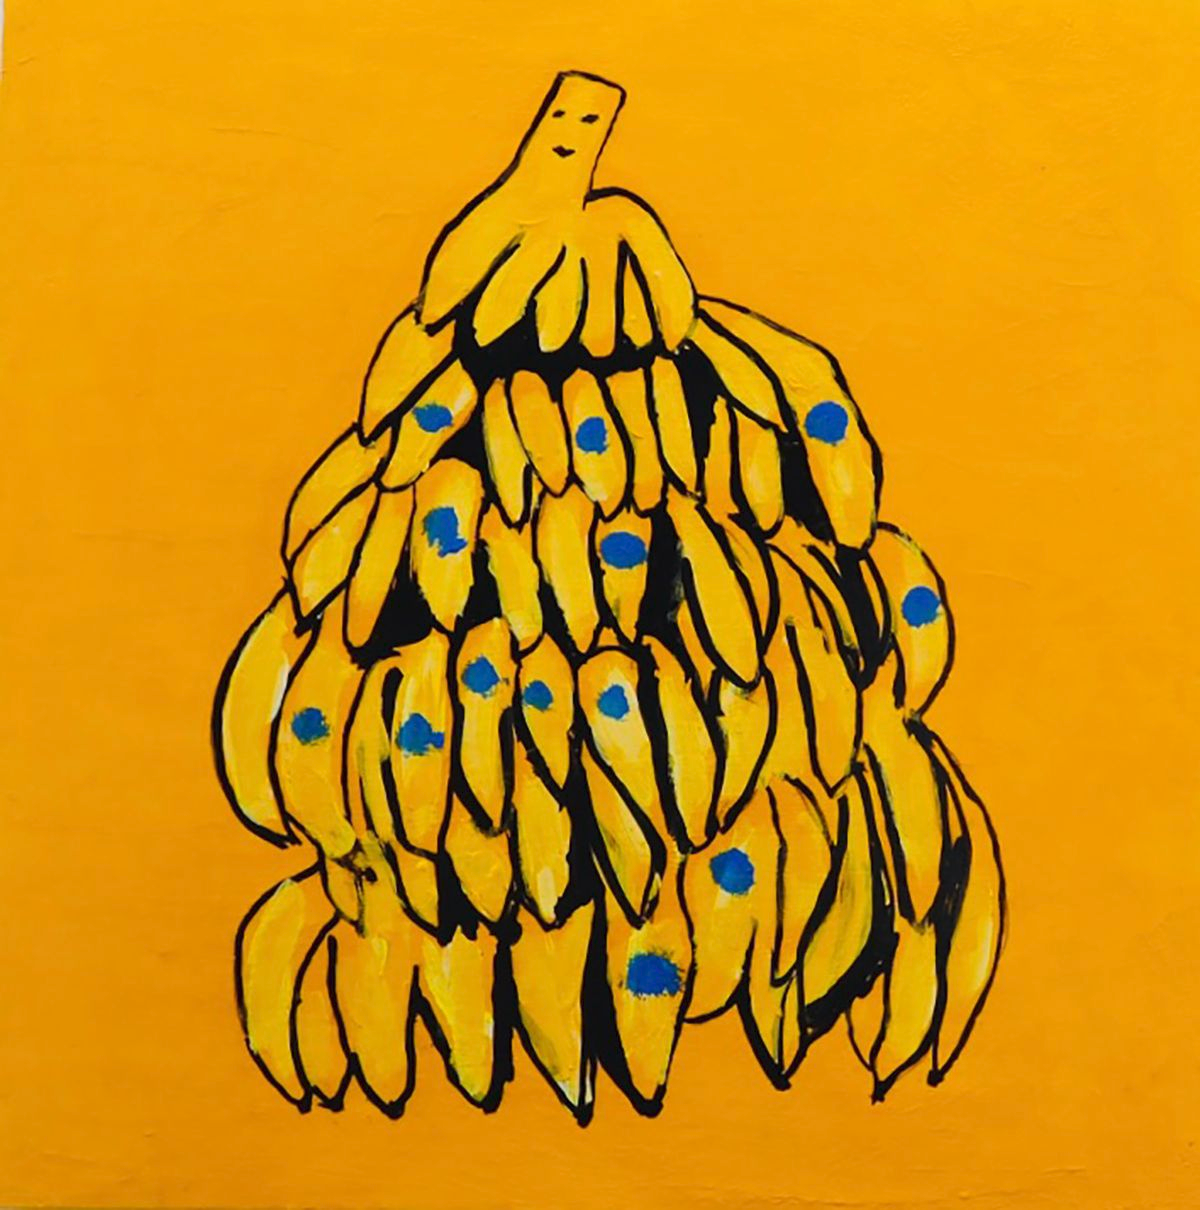 Brian Leo, "Banana Stickers" SOLD